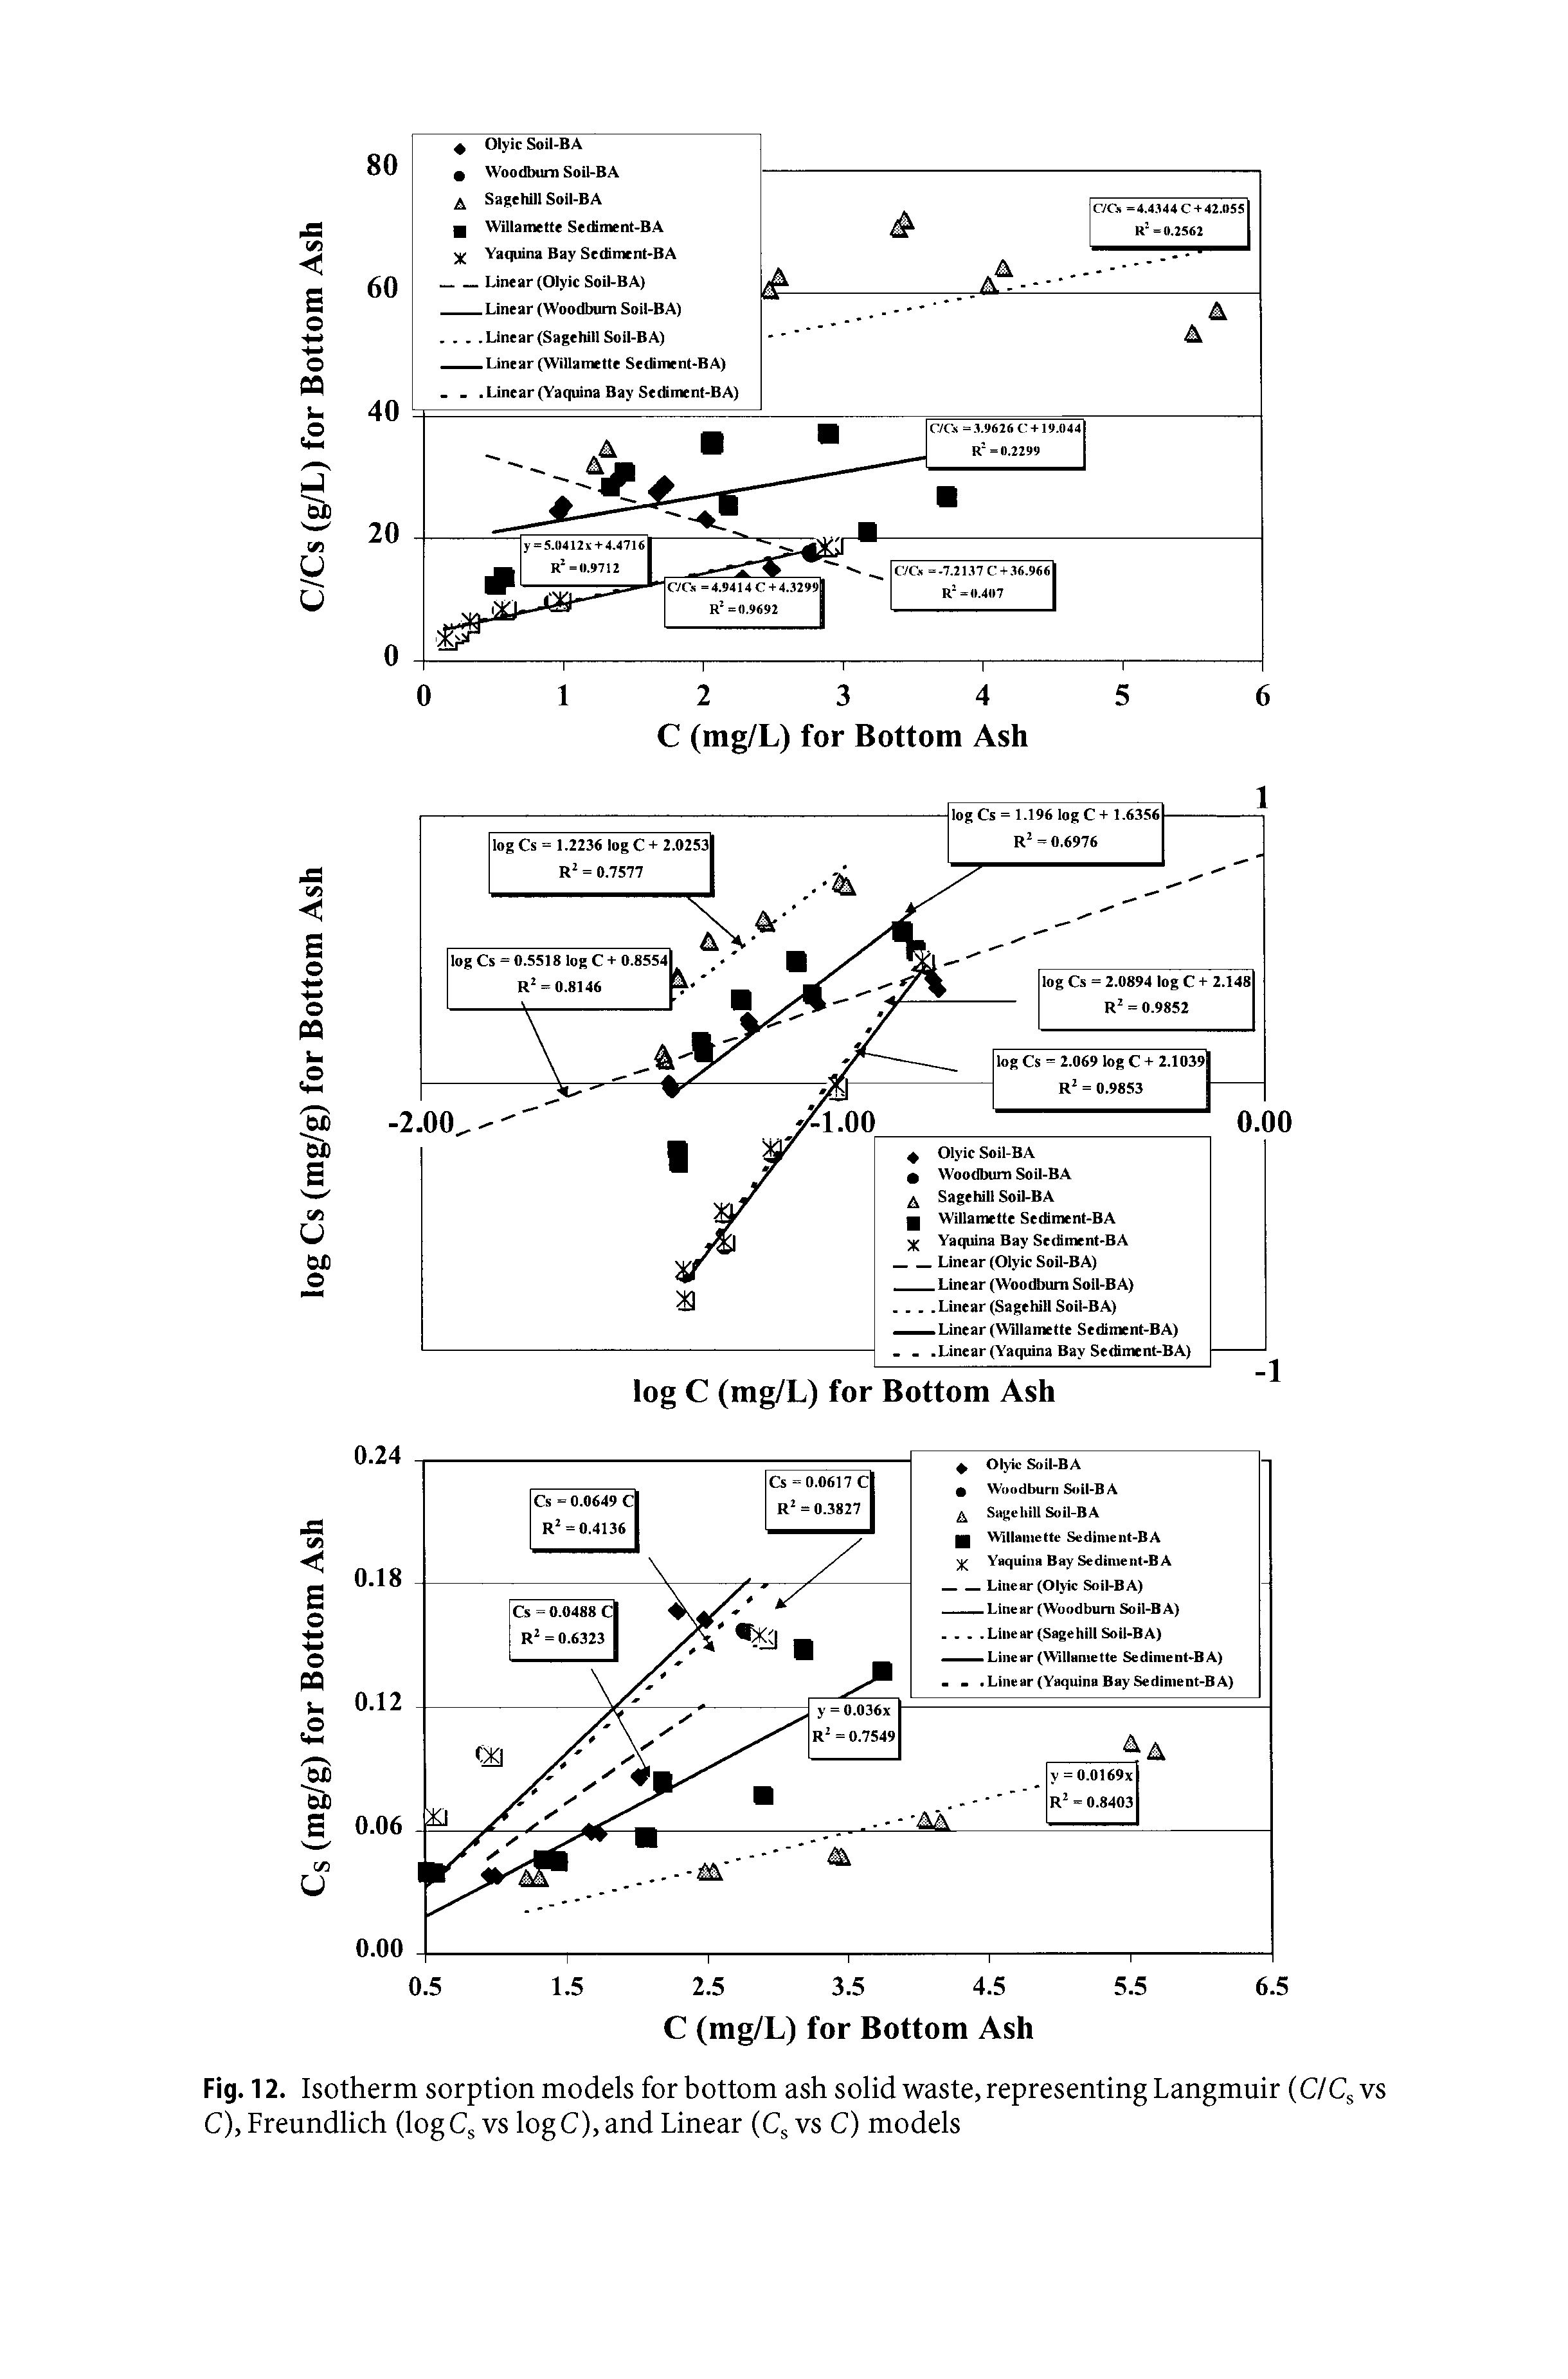 Fig. 12. Isotherm sorption models for bottom ash solid waste, representing Langmuir (C/Cs vs C), Freundlich (logCs vs log C), and Linear (Csvs C) models...